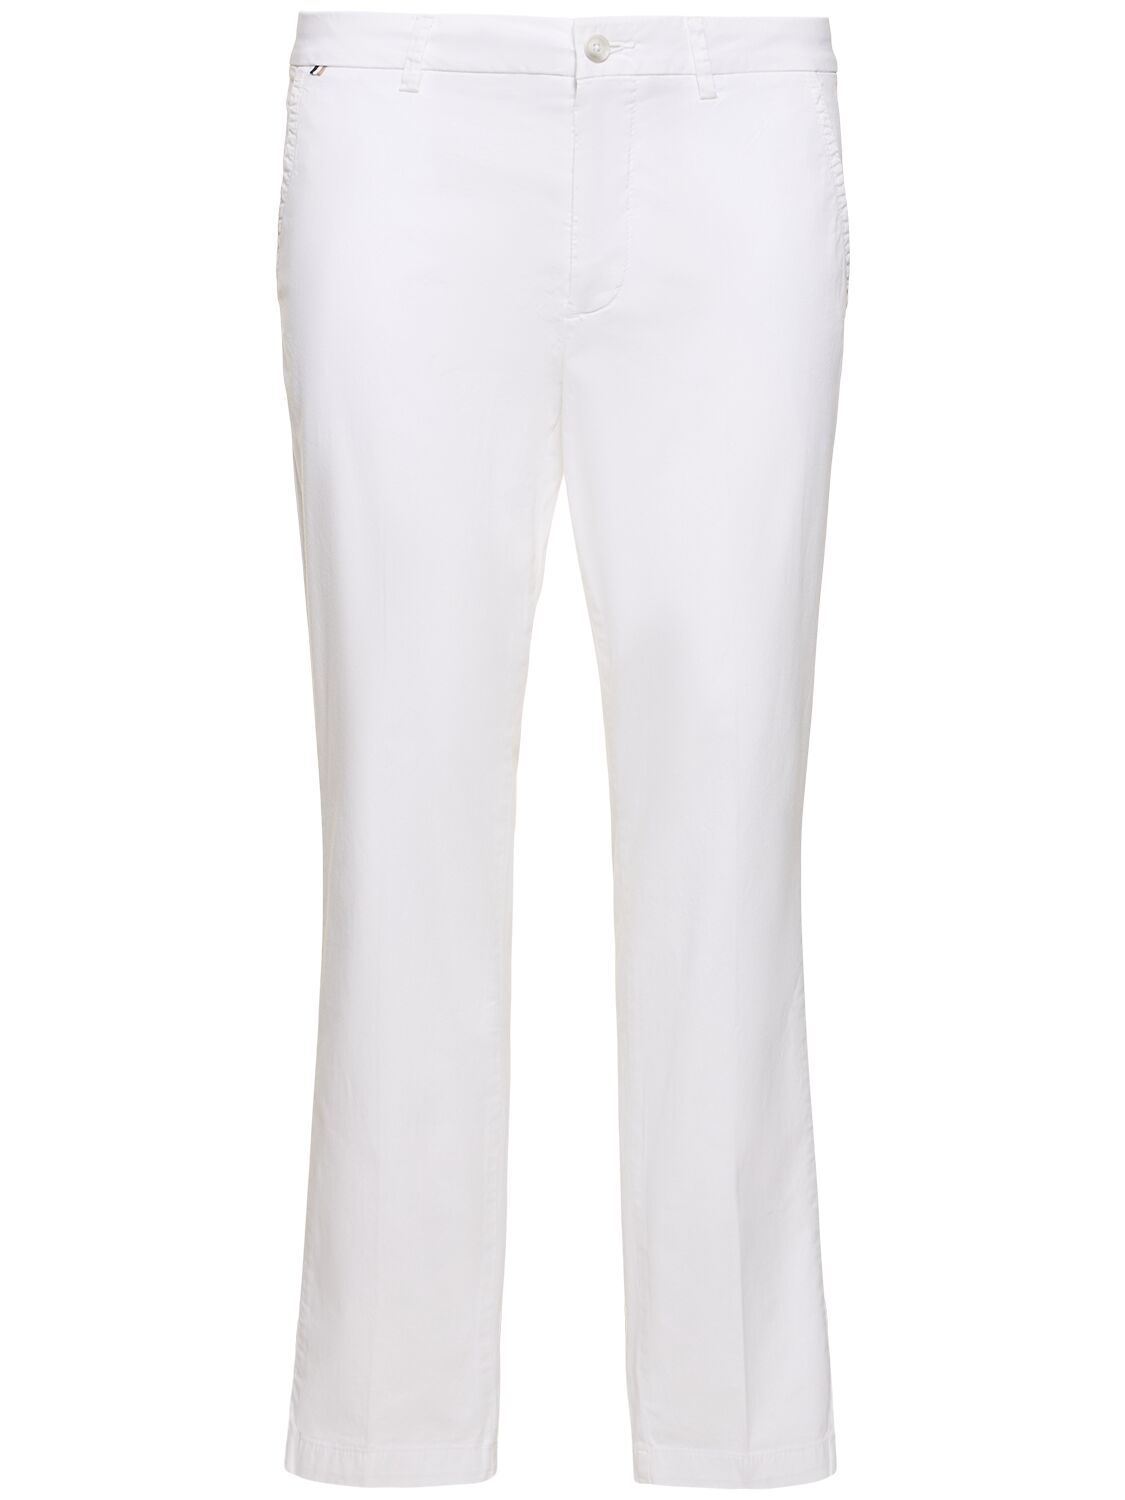 Image of Kaiton Stretch Cotton Pants